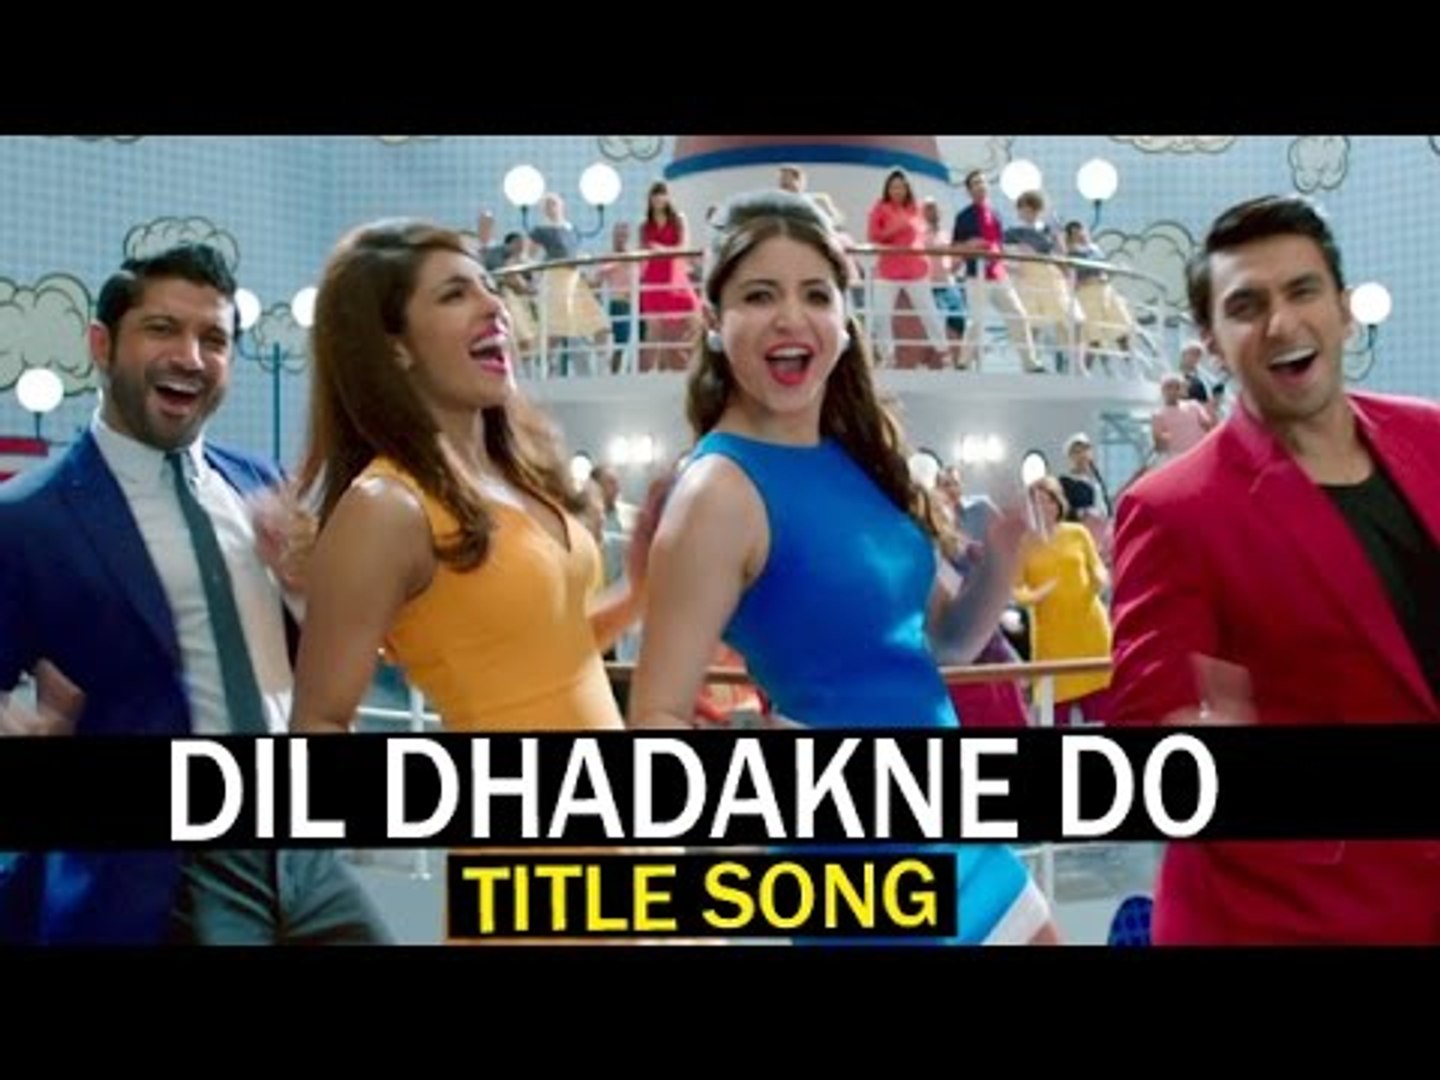 Dil Dhadakne Do' Title Song (Video) - Singers- Priyanka Chopra, Farhan Akhtar